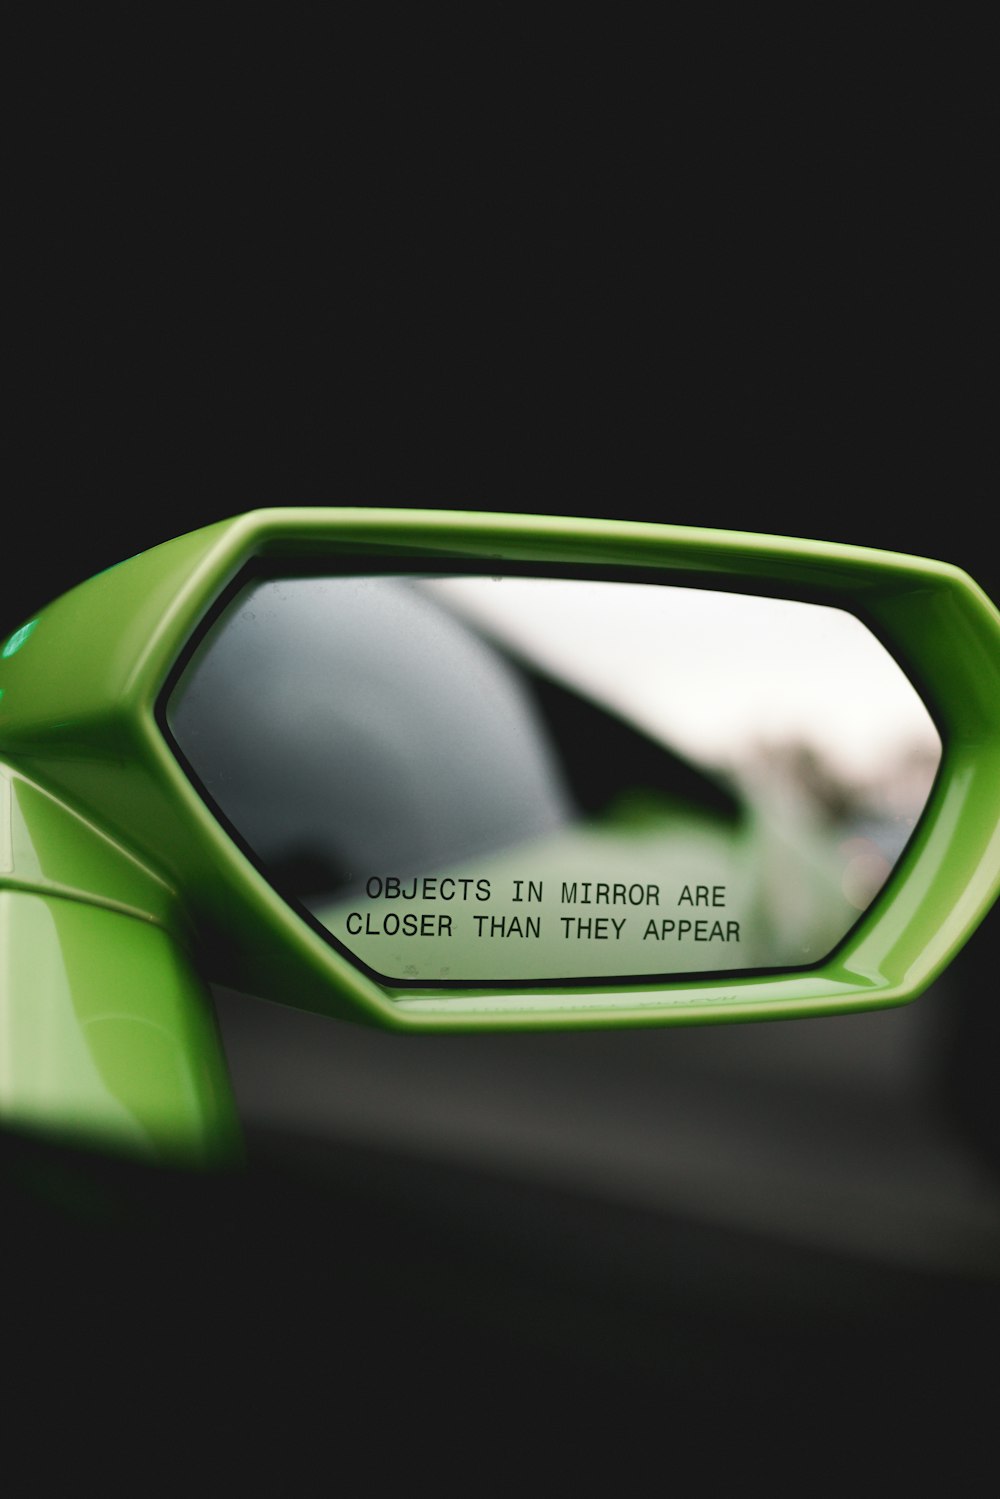 green framed vehicle side mirror